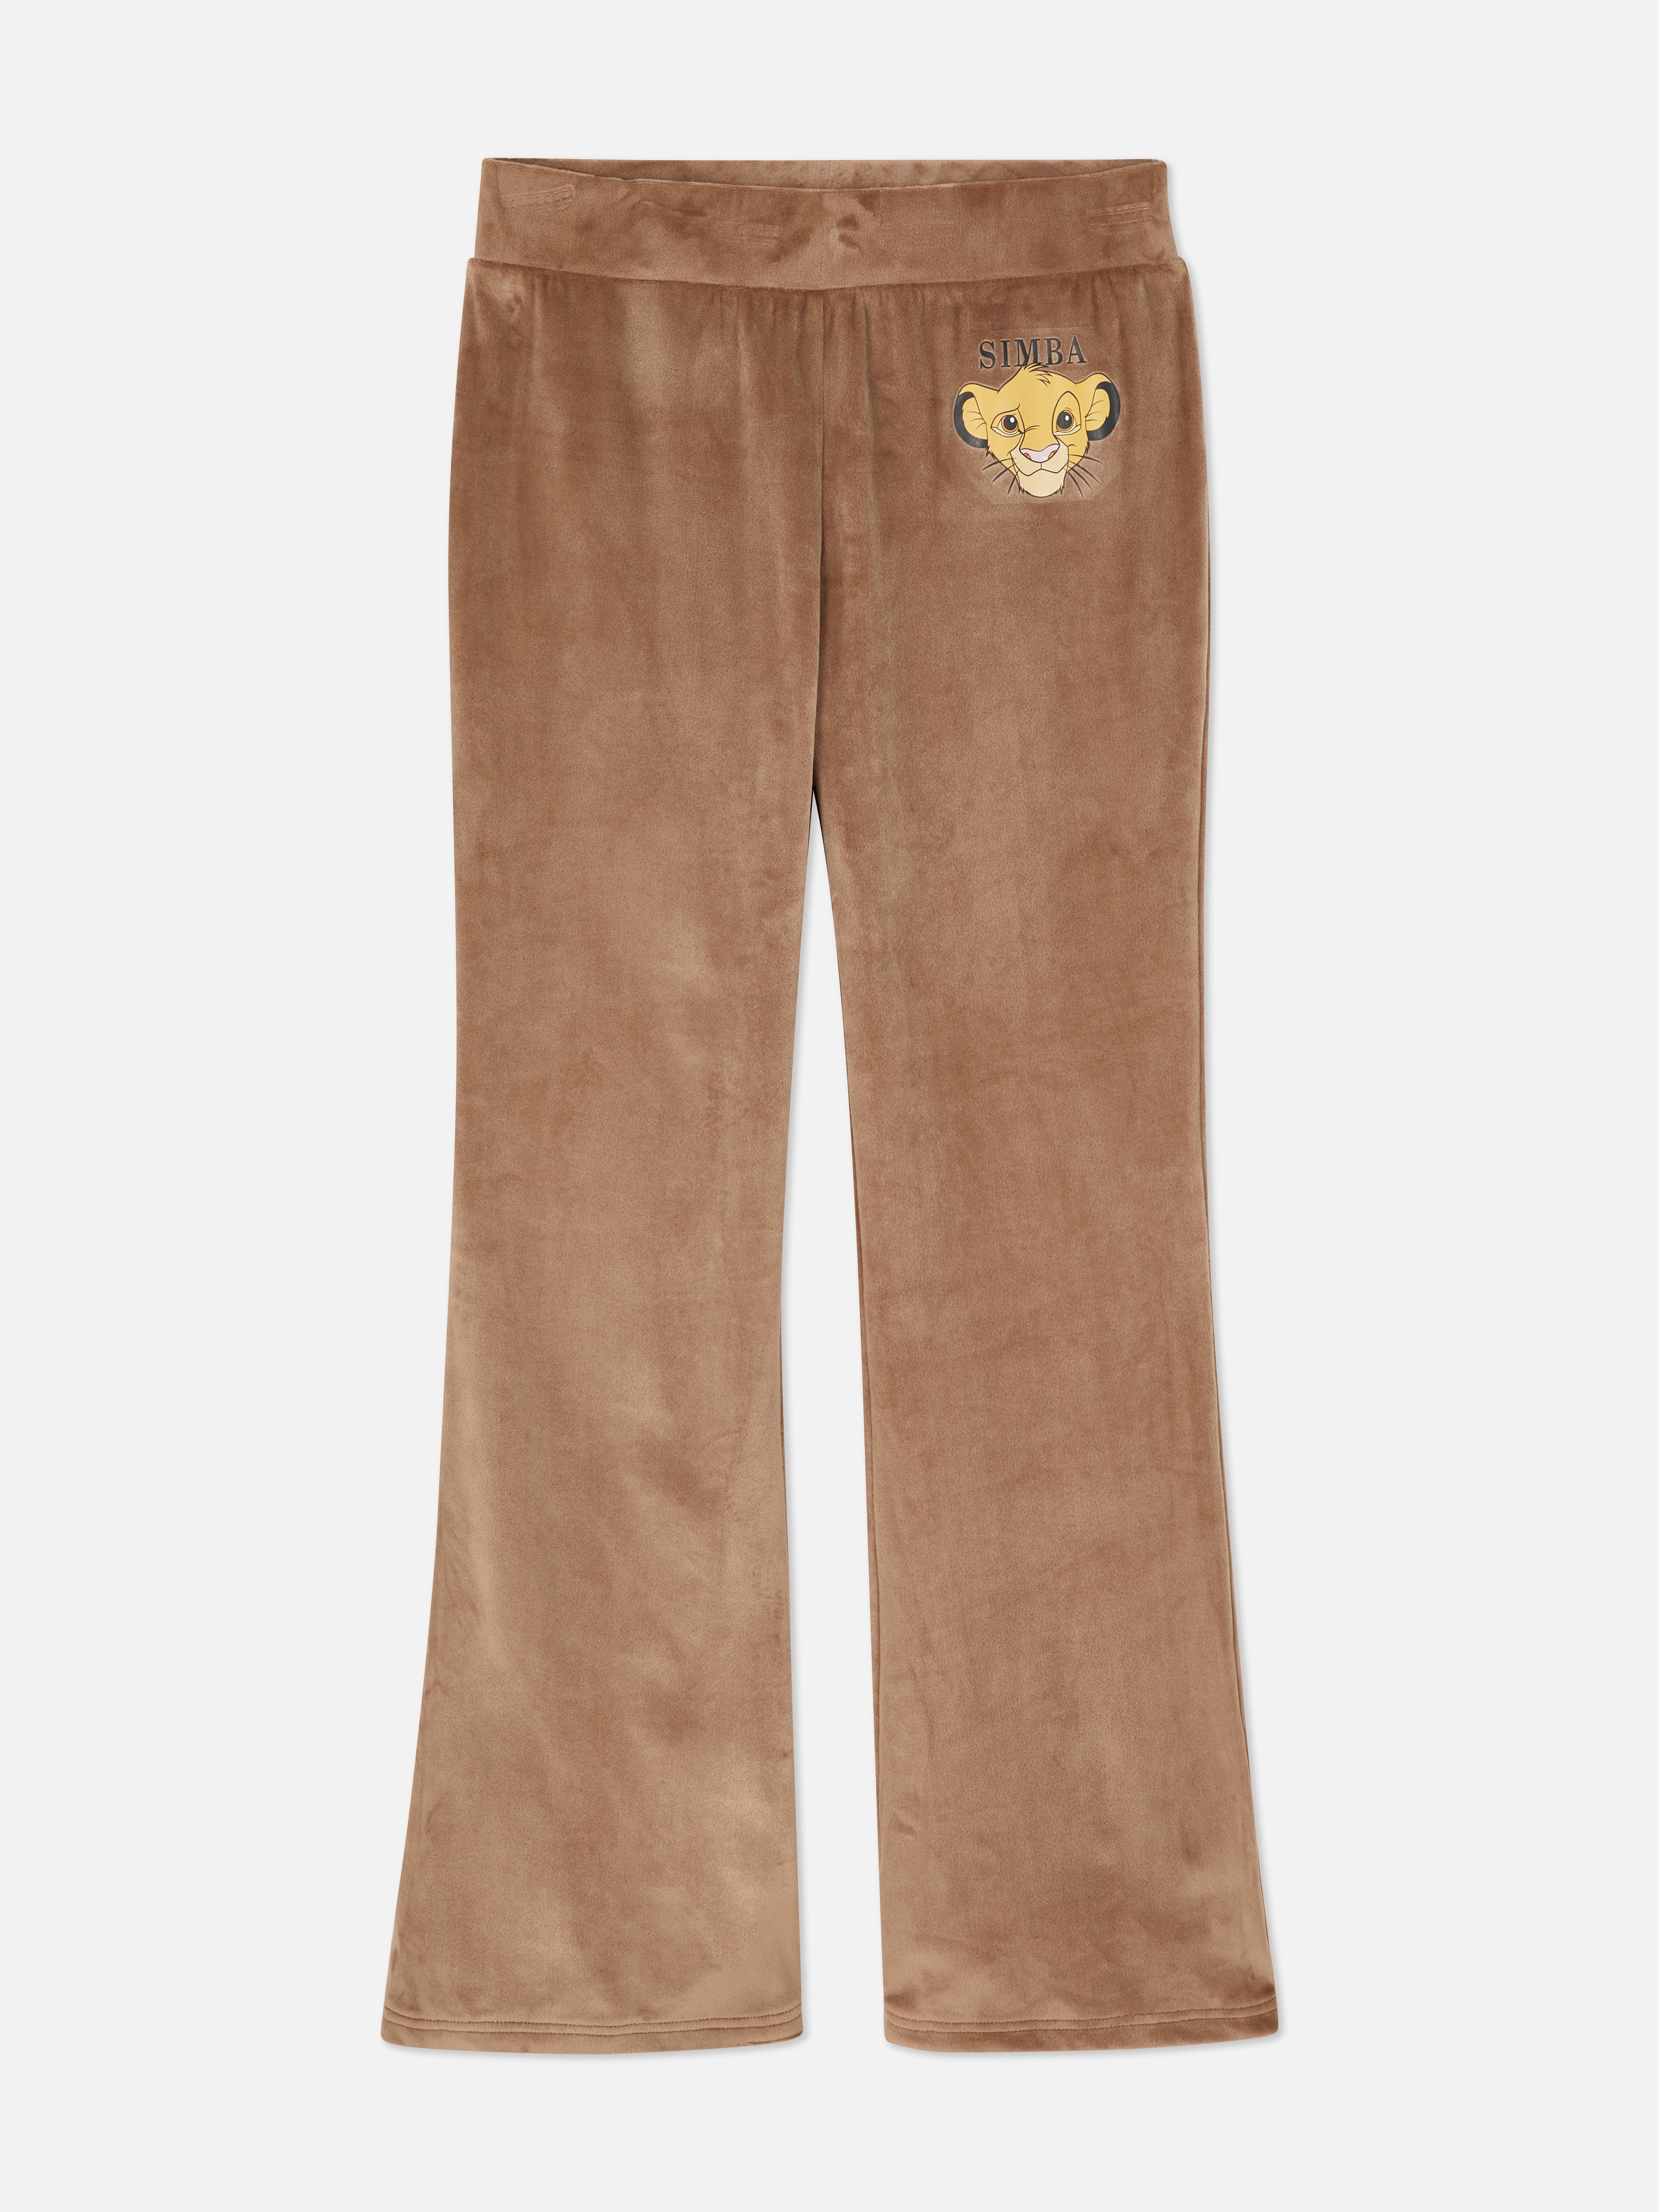 Disney’s The Lion King Minky Pyjama Bottoms